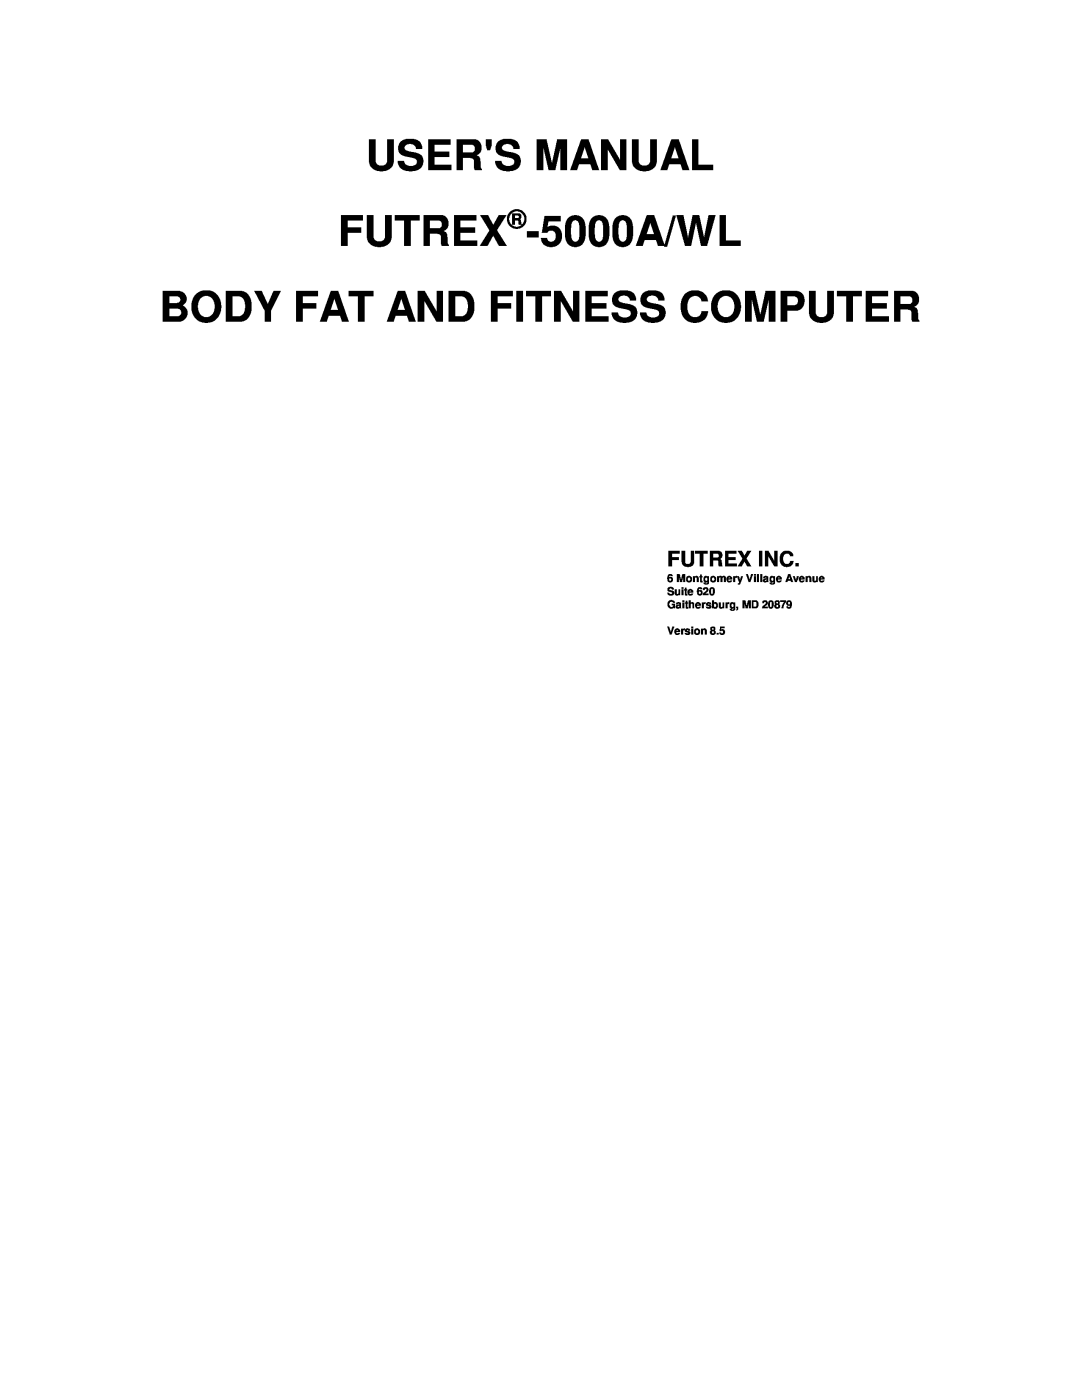 Futrex 5000/XL, 5000A/ZL manual USERS MANUAL FUTREX-5000A/WL BODY FAT AND FITNESS COMPUTER, Futrex Inc 